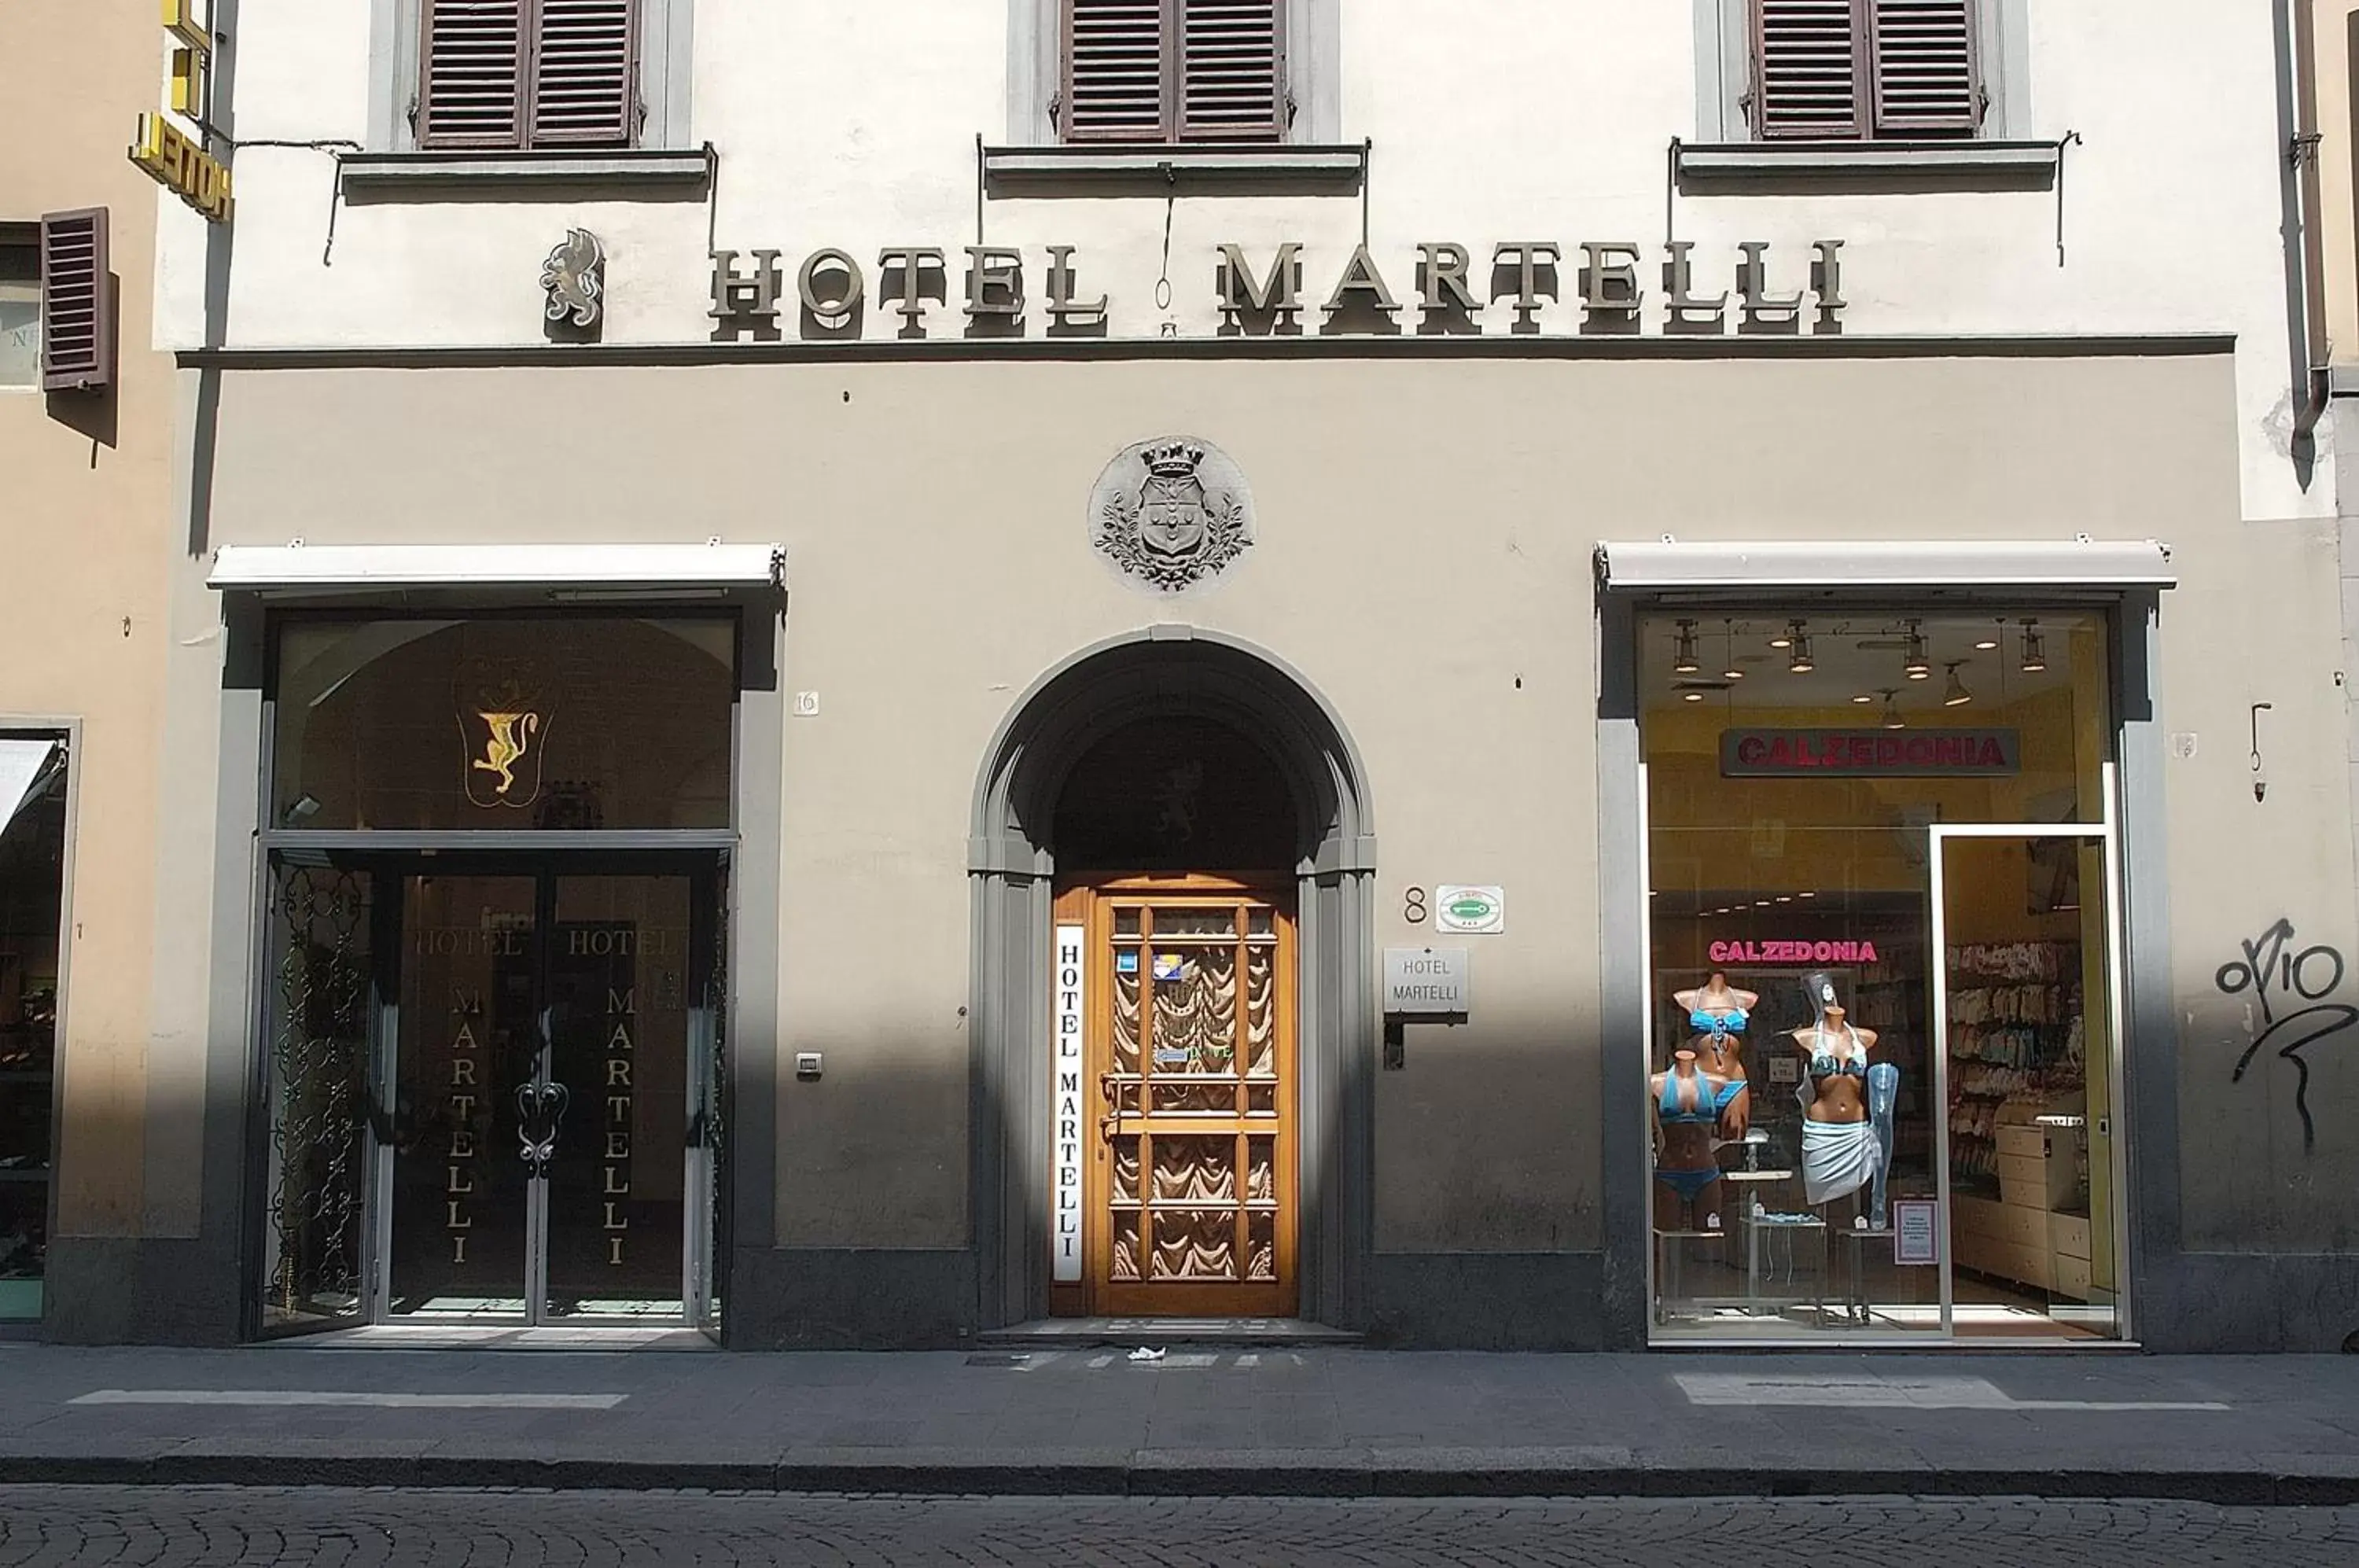 Facade/entrance in Hotel Martelli